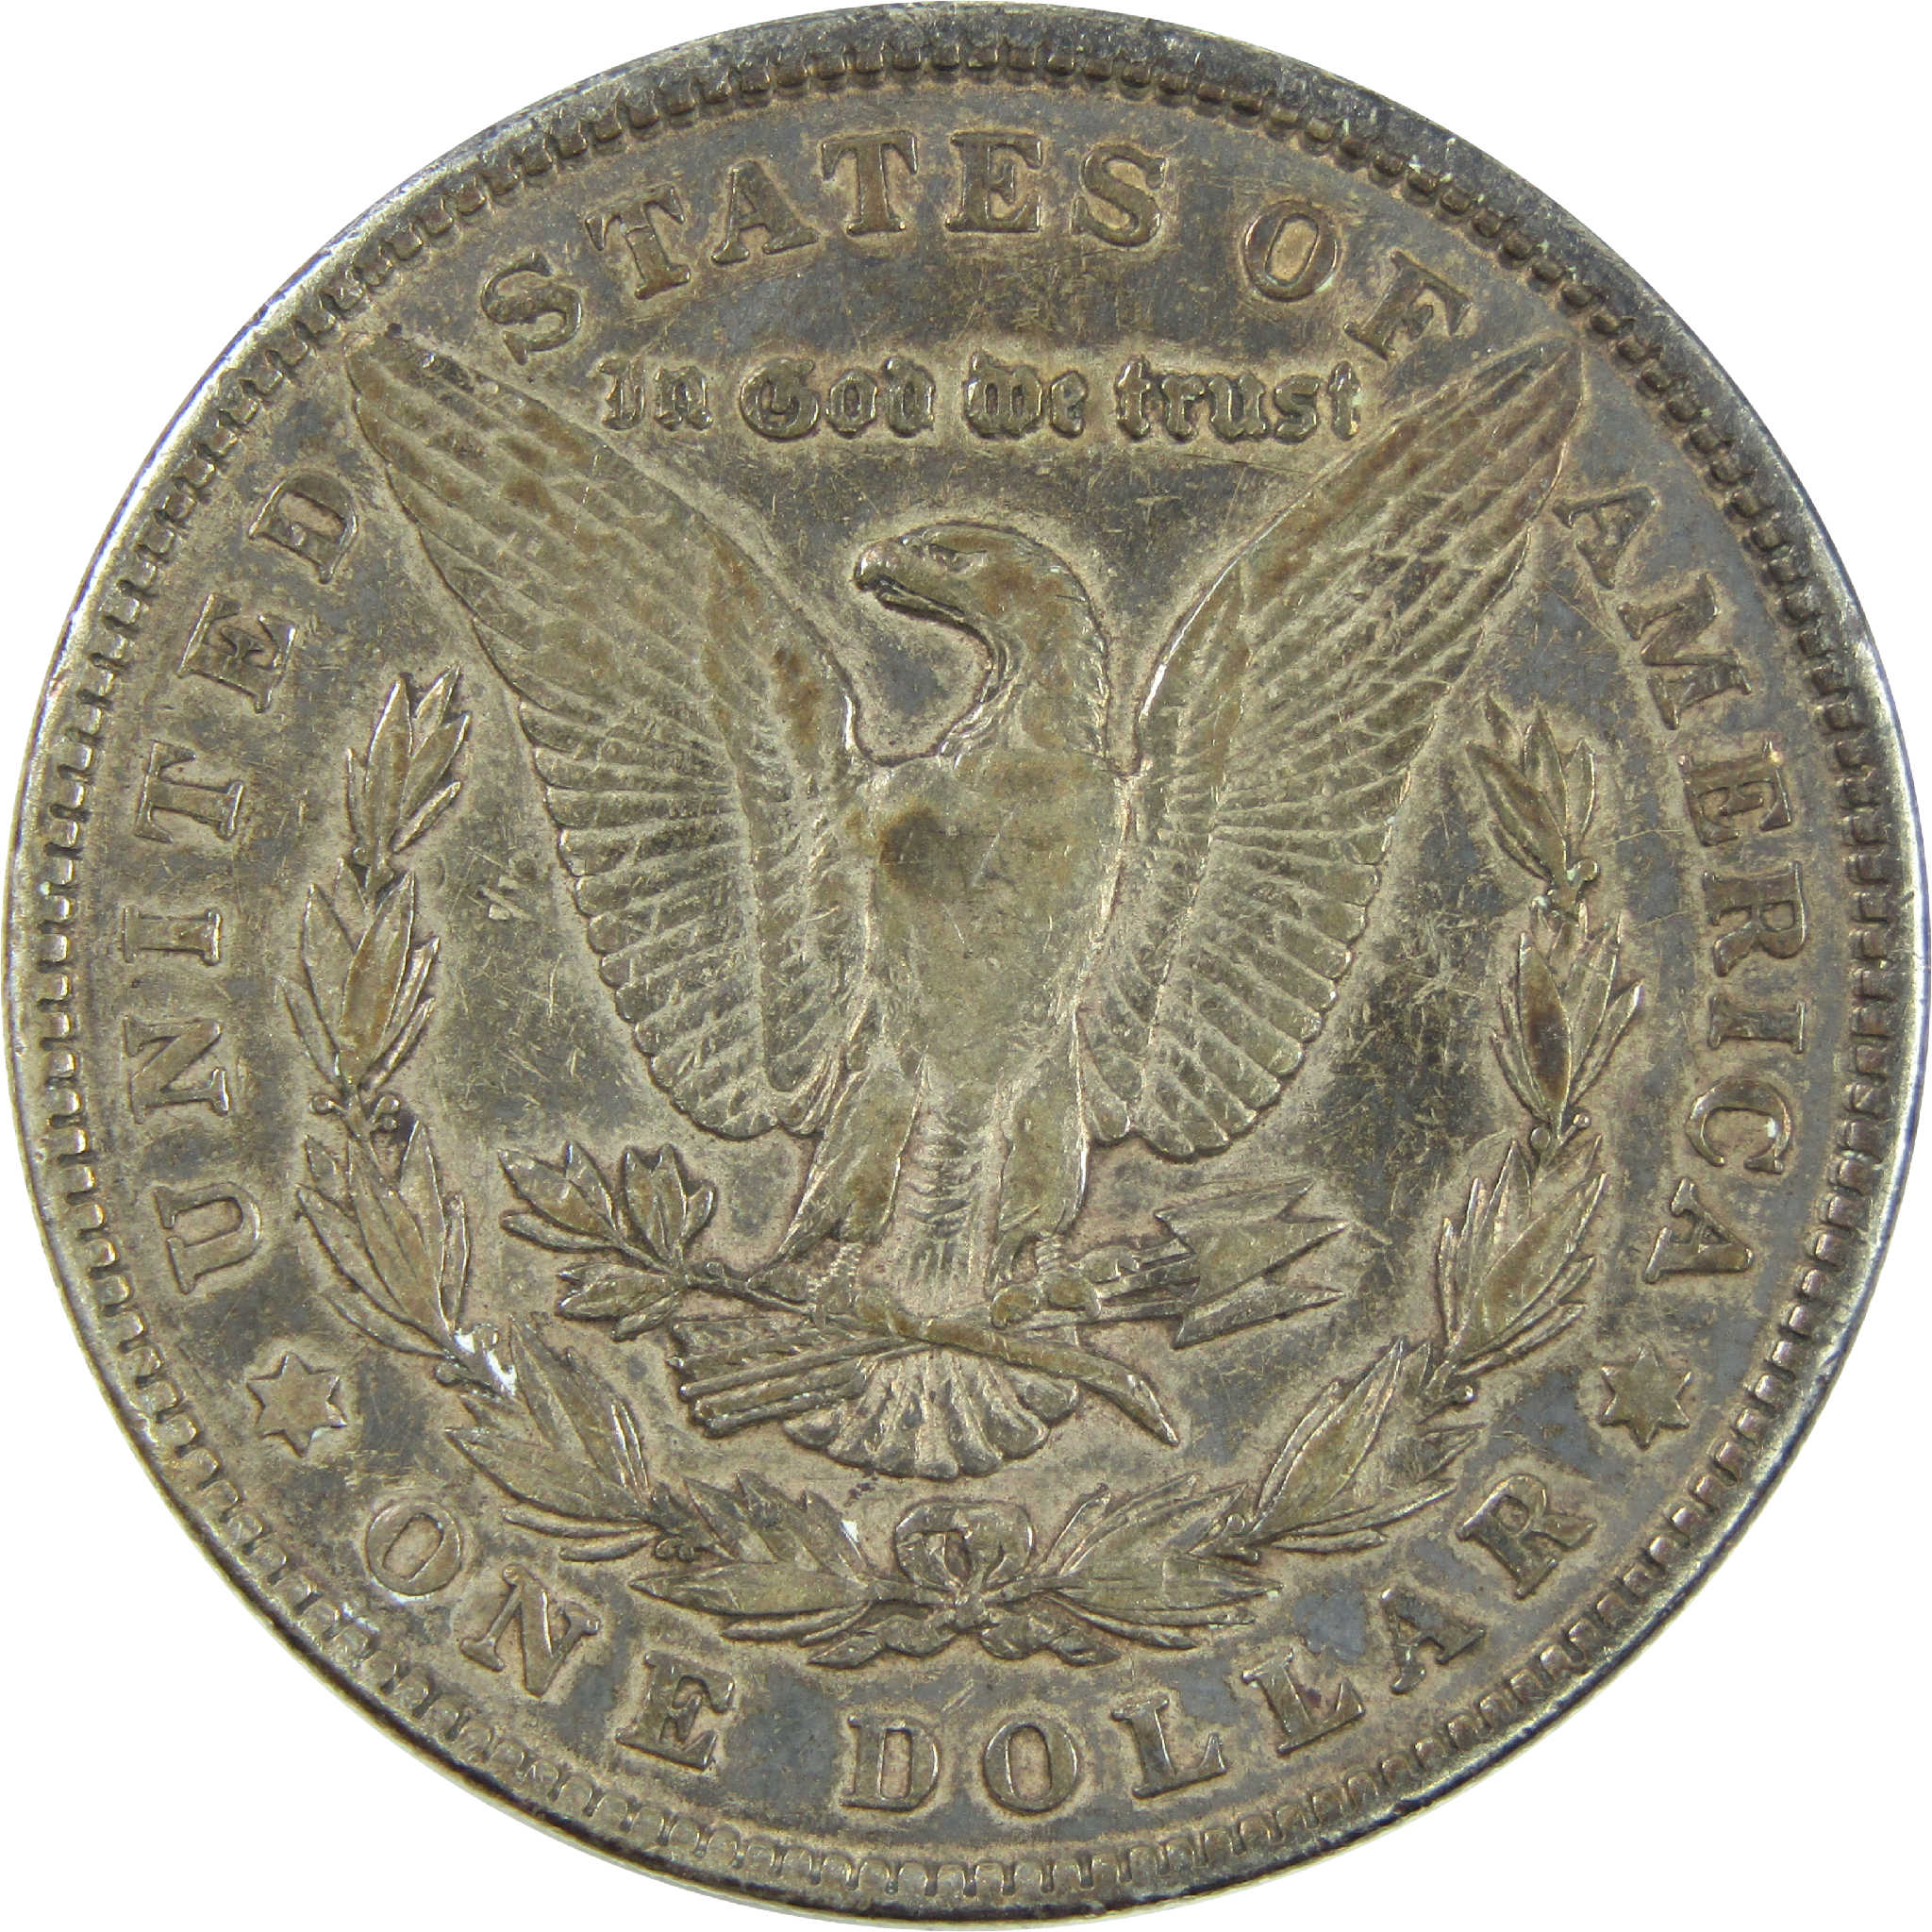 1904 Morgan Dollar VF Very Fine Silver $1 Coin SKU:I13505 - Morgan coin - Morgan silver dollar - Morgan silver dollar for sale - Profile Coins &amp; Collectibles